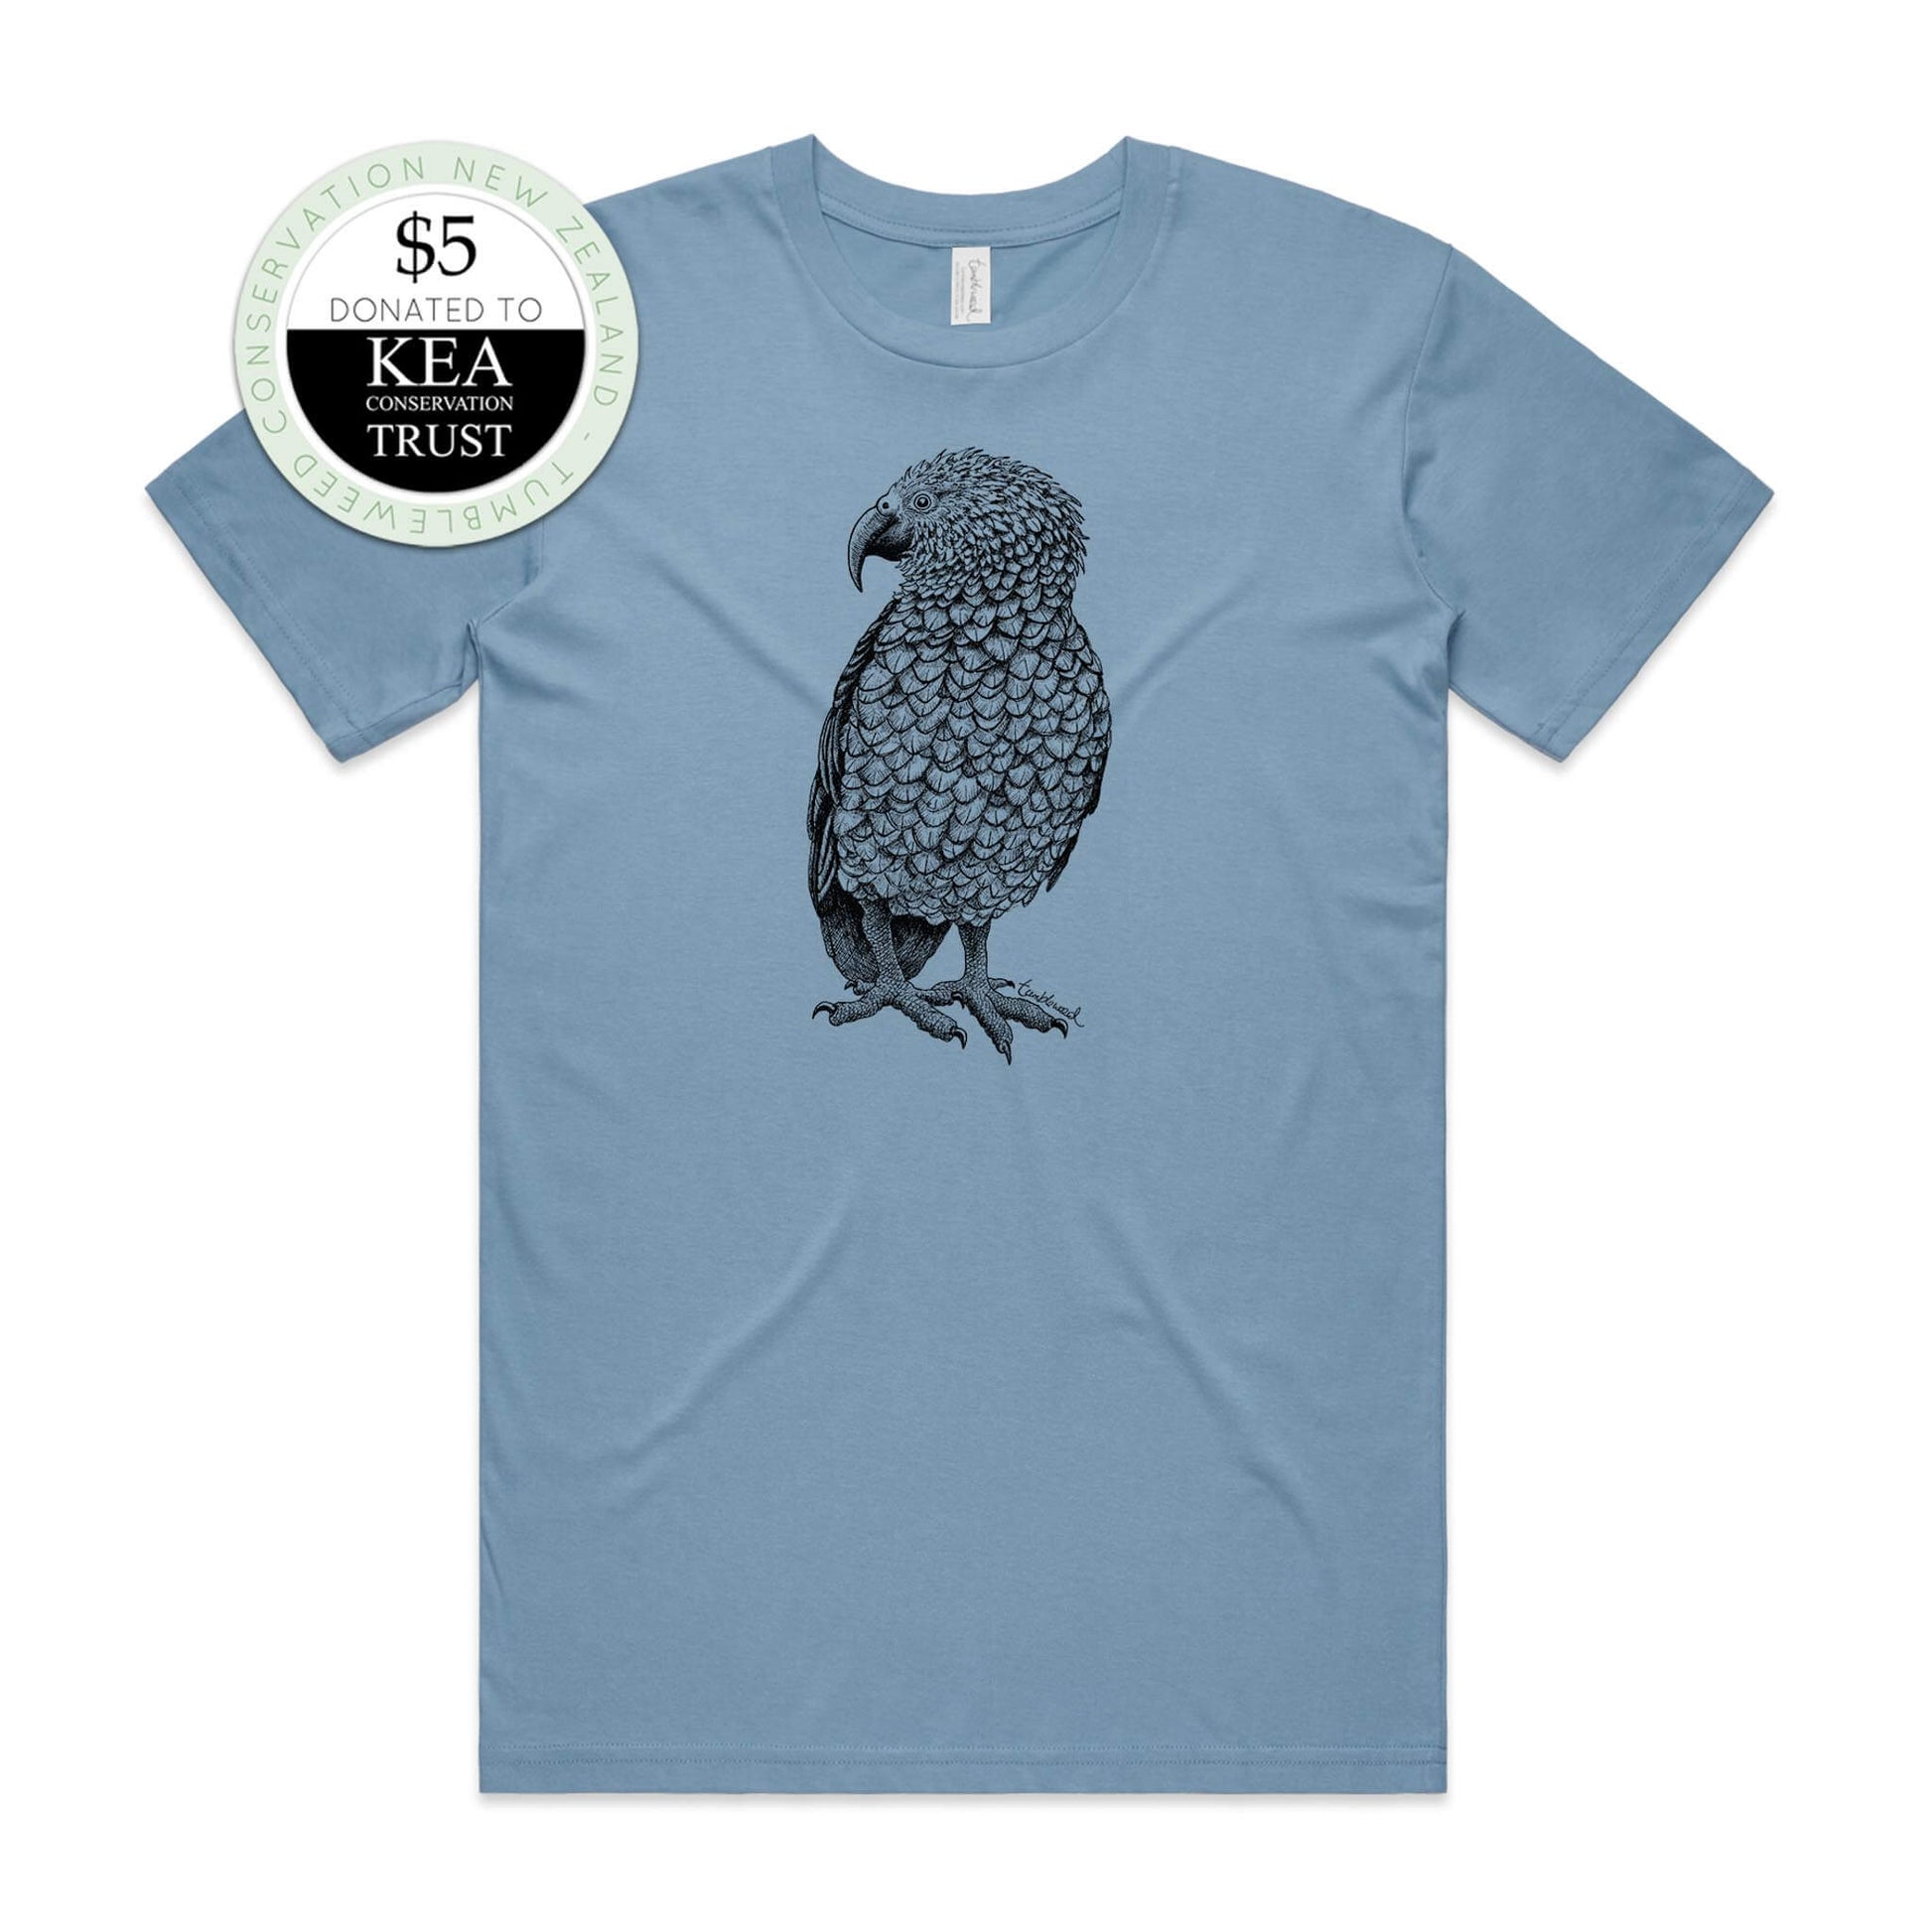 Sage, female t-shirt featuring a screen printed kea design.